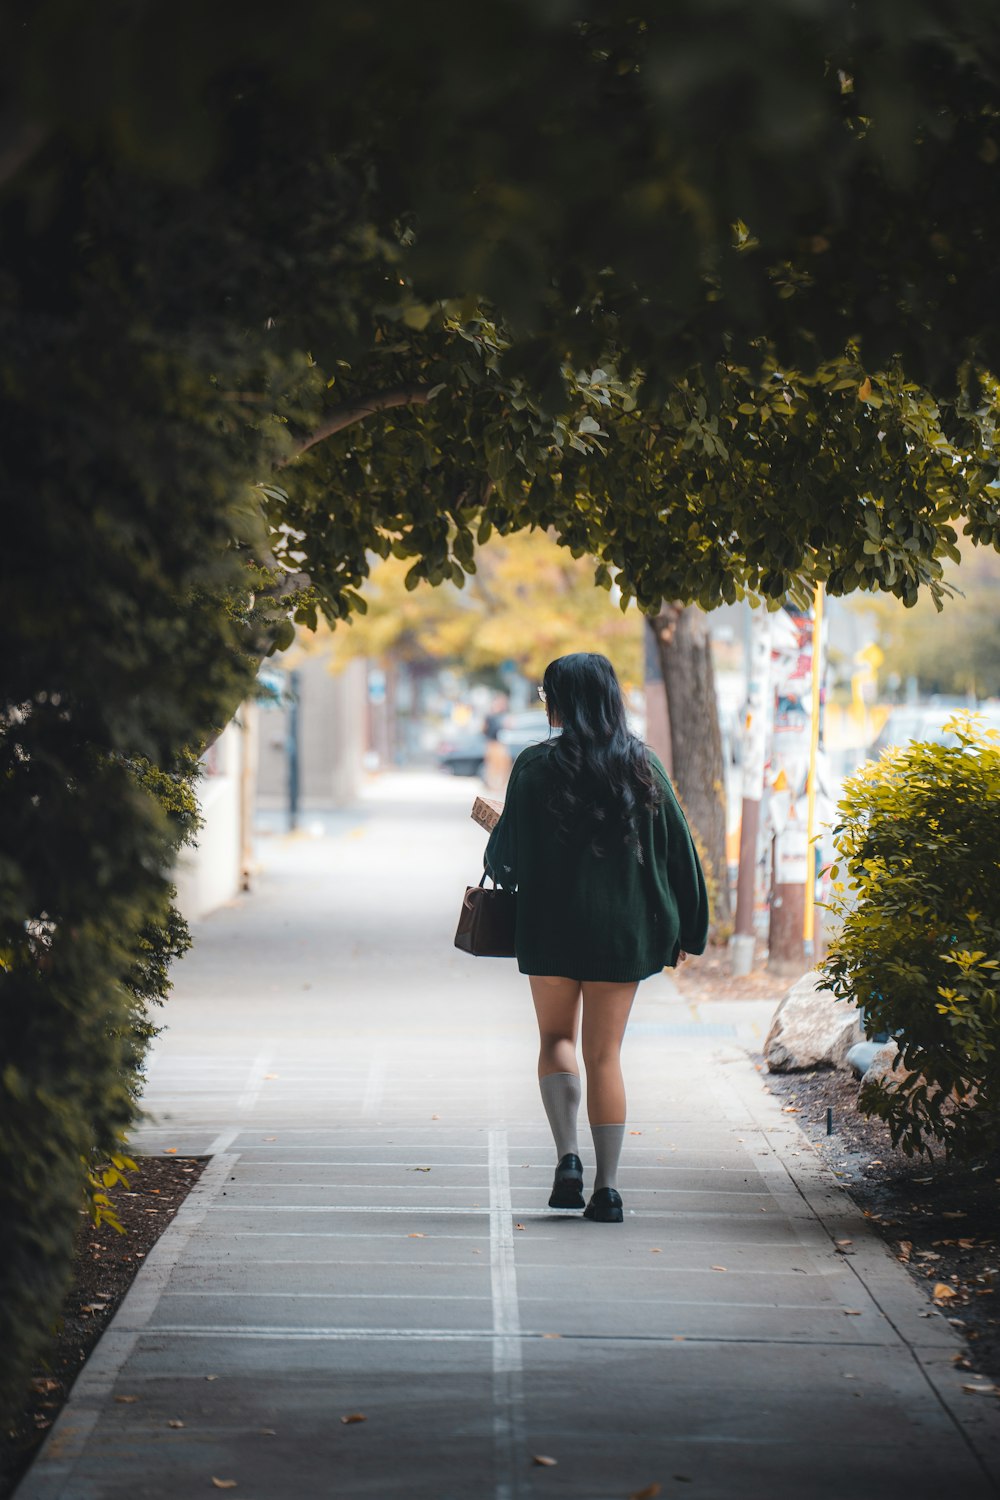 a woman walking down a sidewalk under a tree